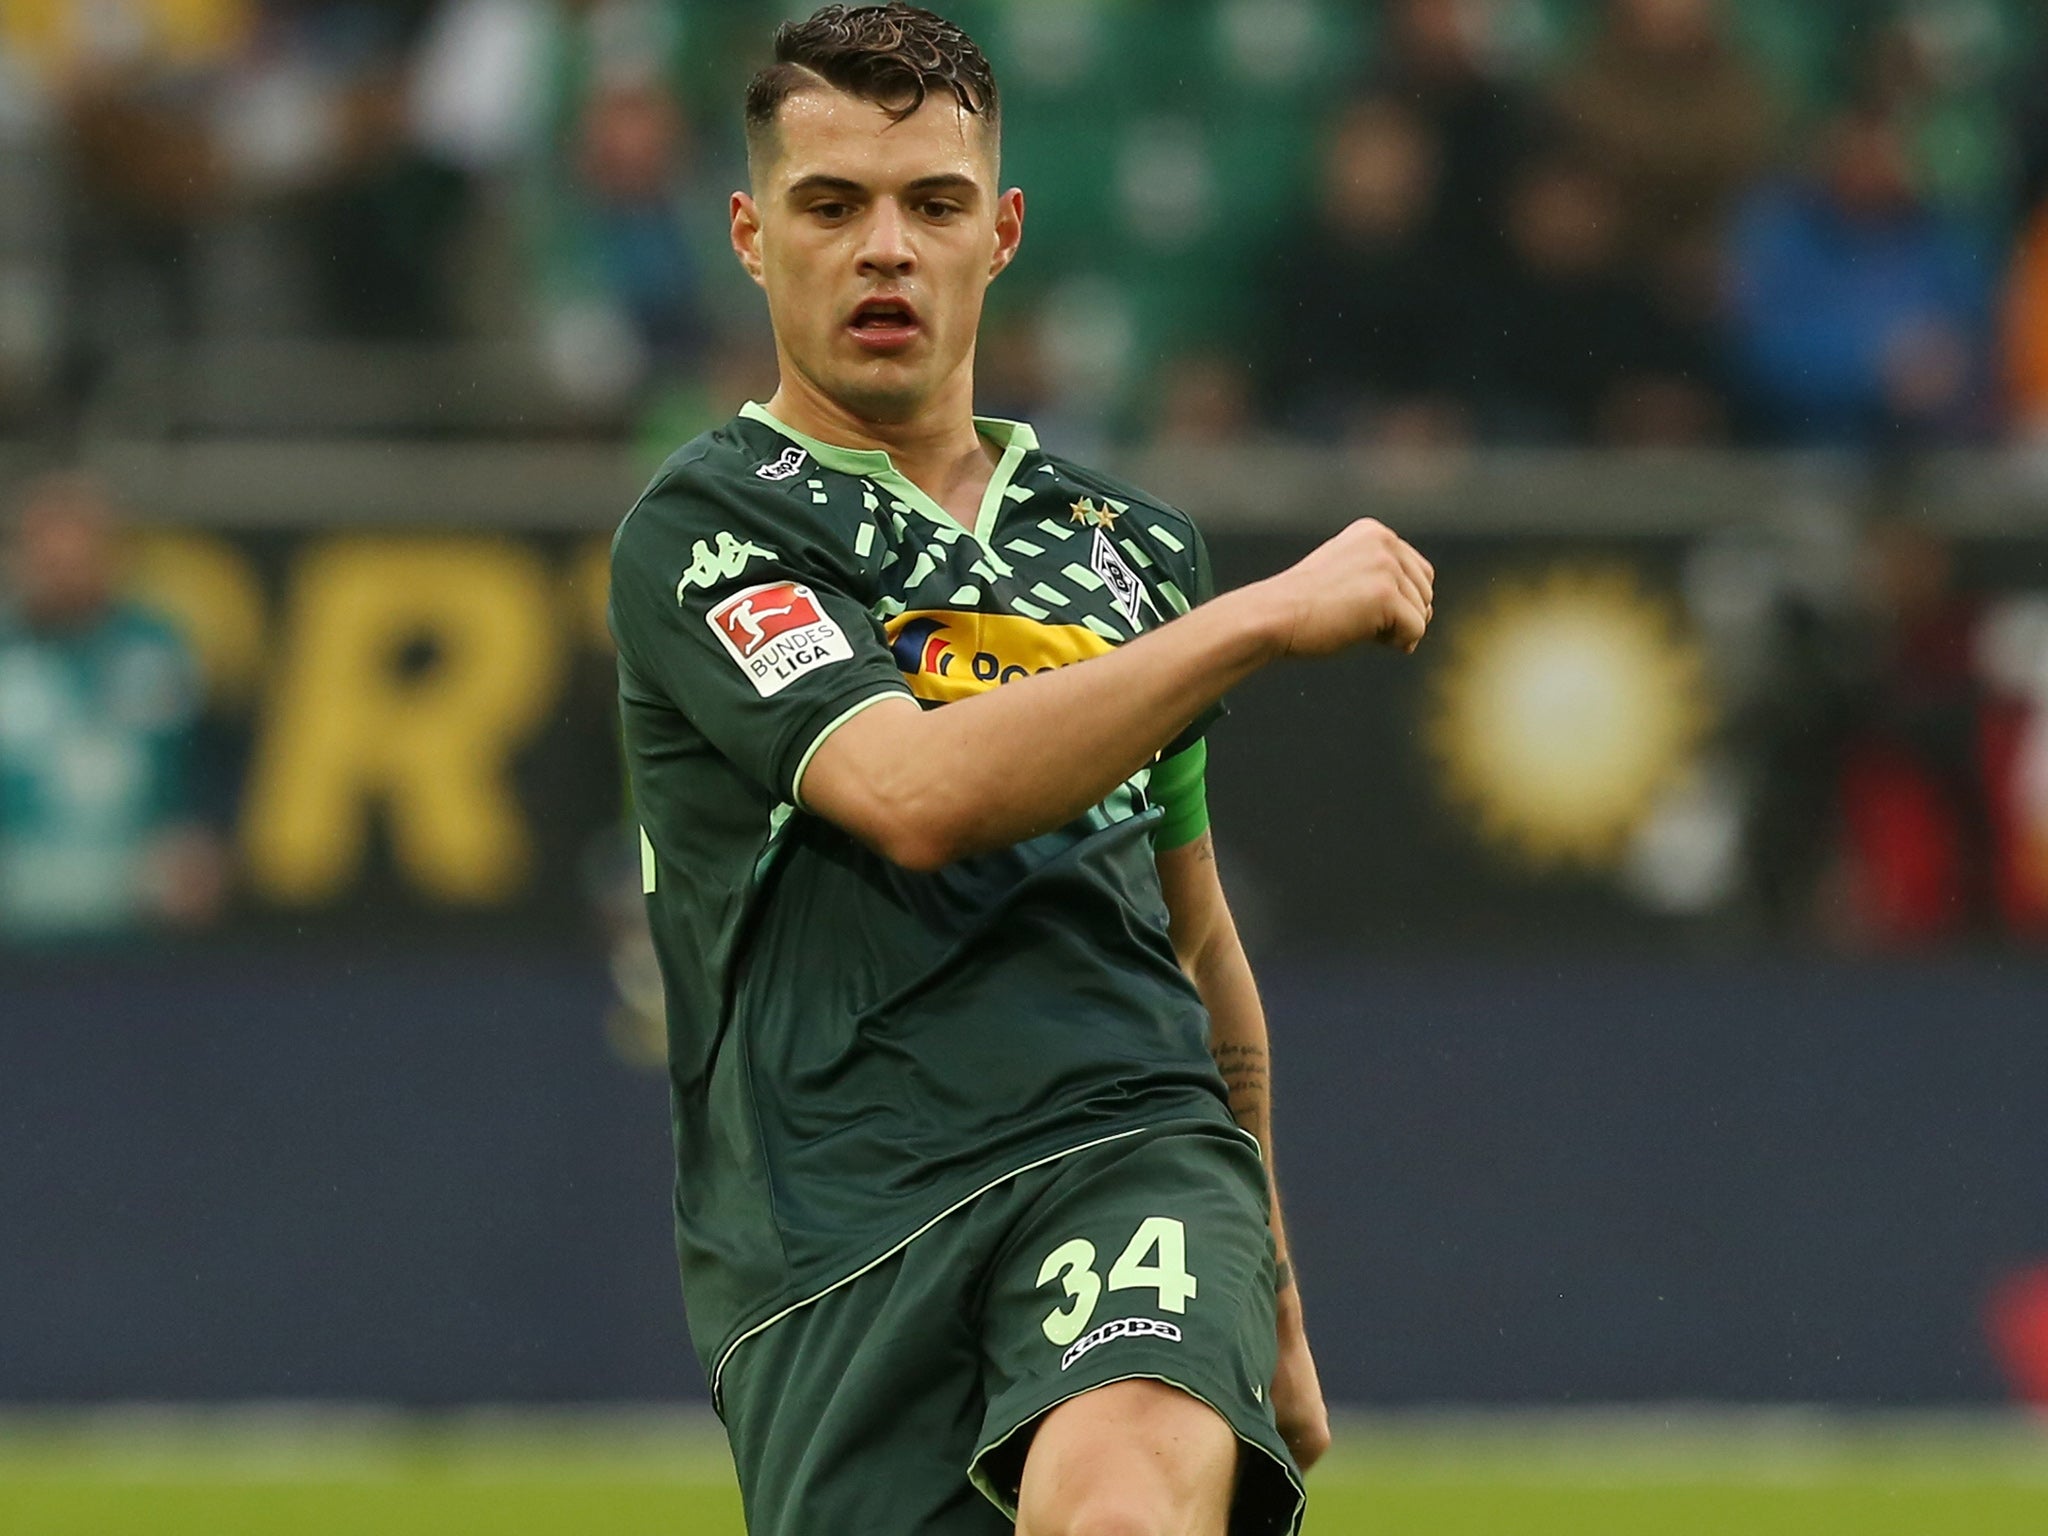 Granit Xhaka in action for Borussia Monchengladbach